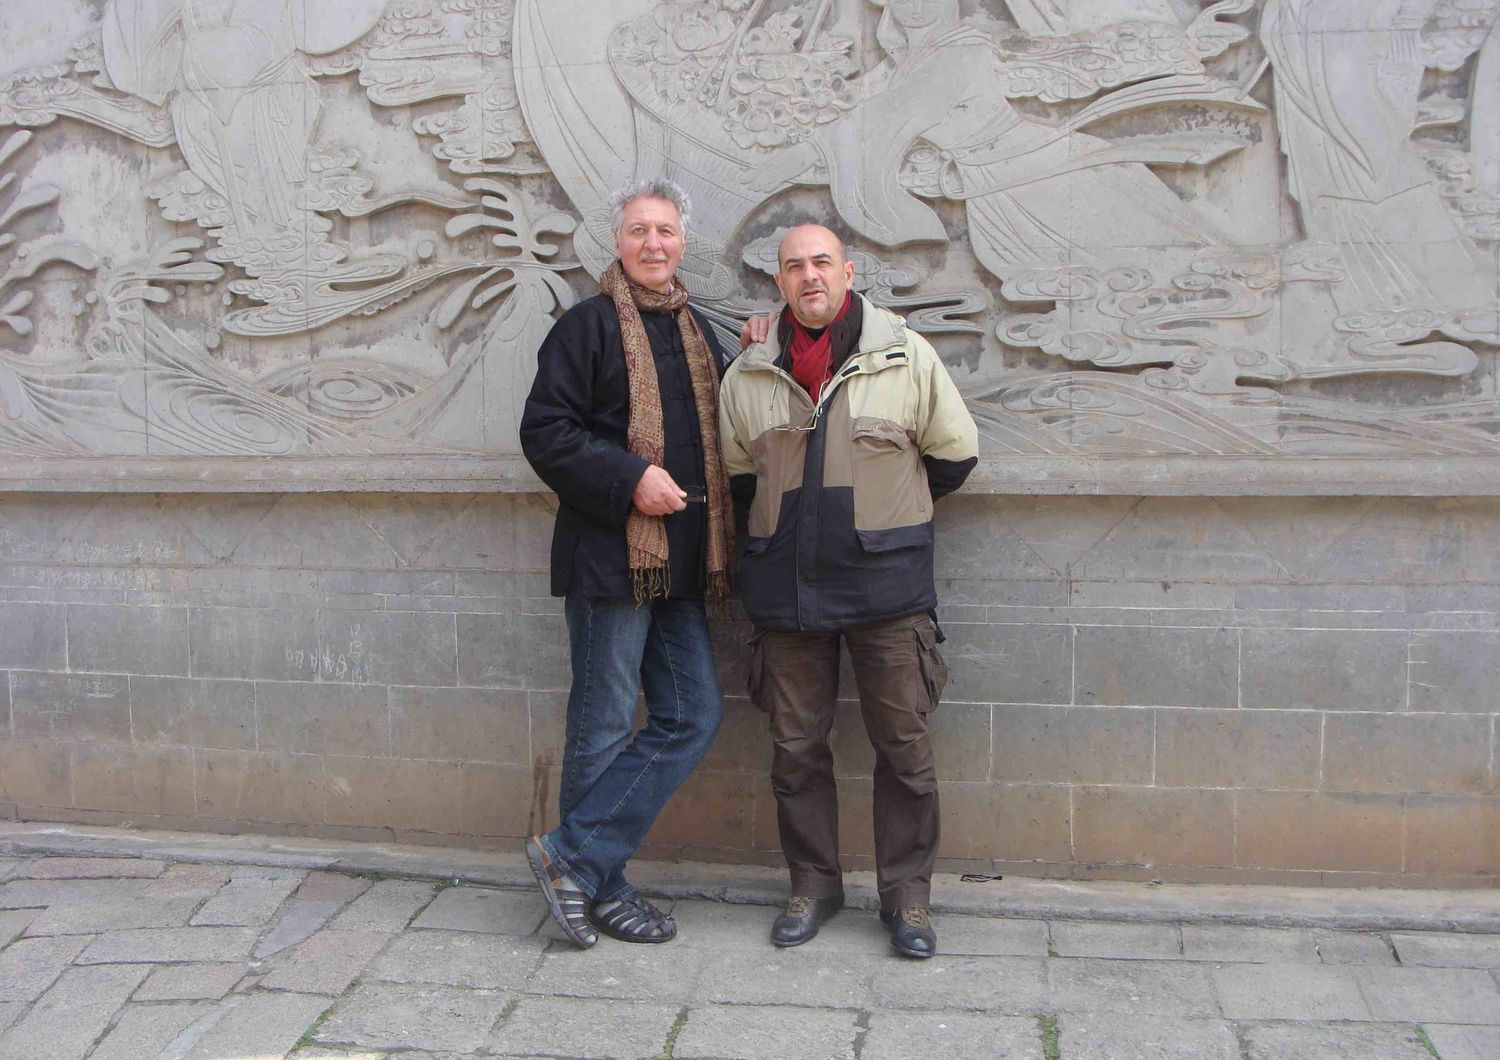 &nbsp;Koko con l'autore a Xi'an, l'antica capitale della Cina